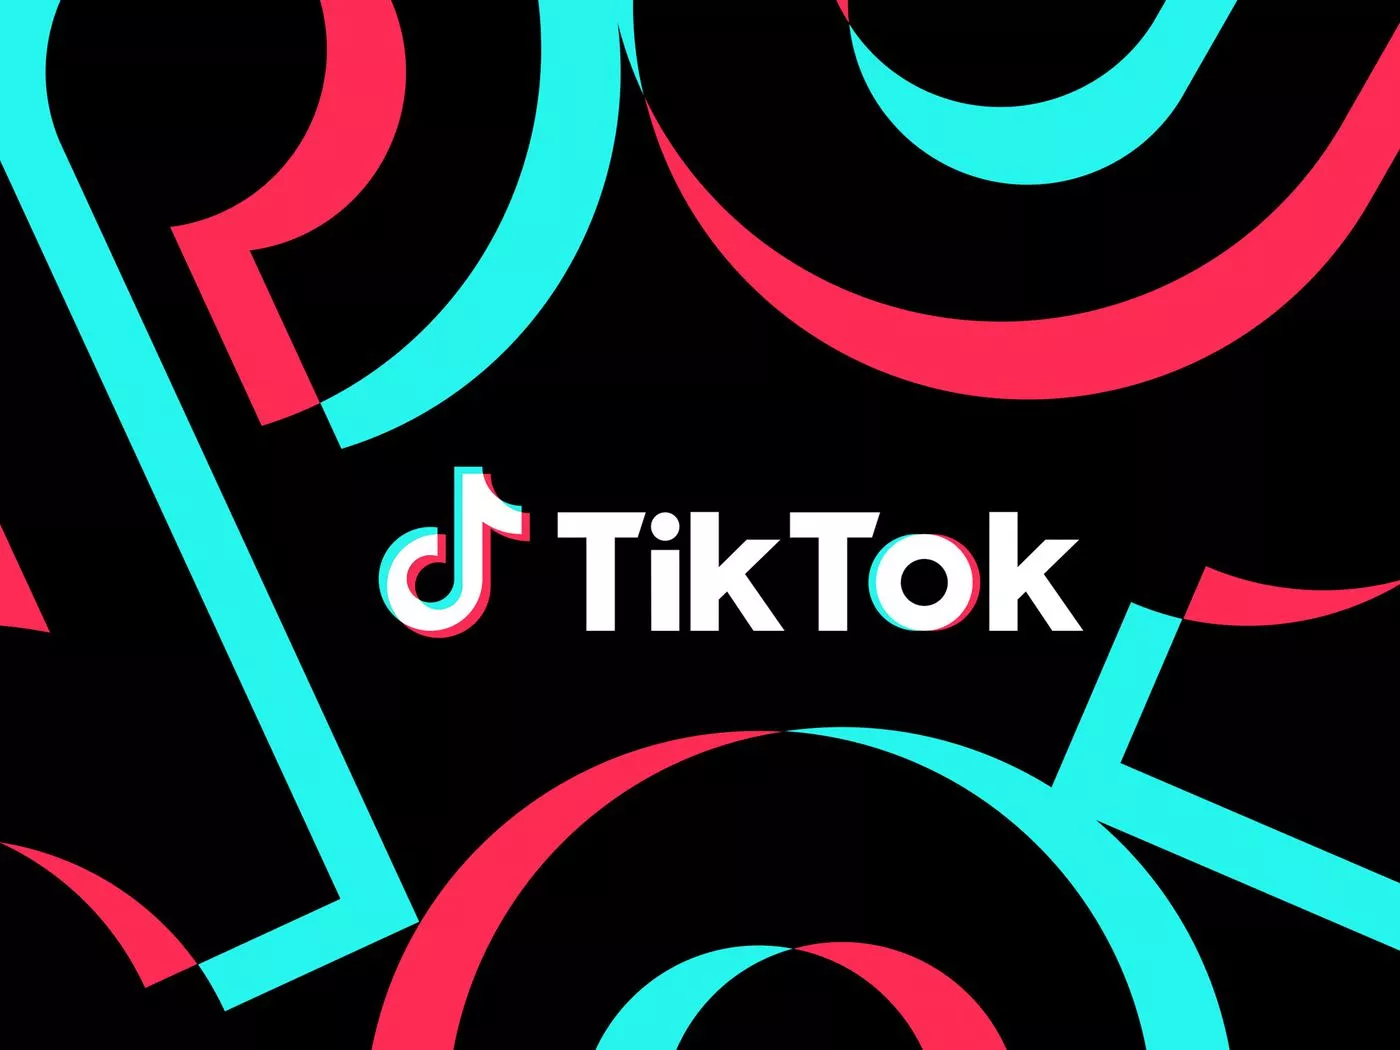 Other Trendy Acronyms on TikTok